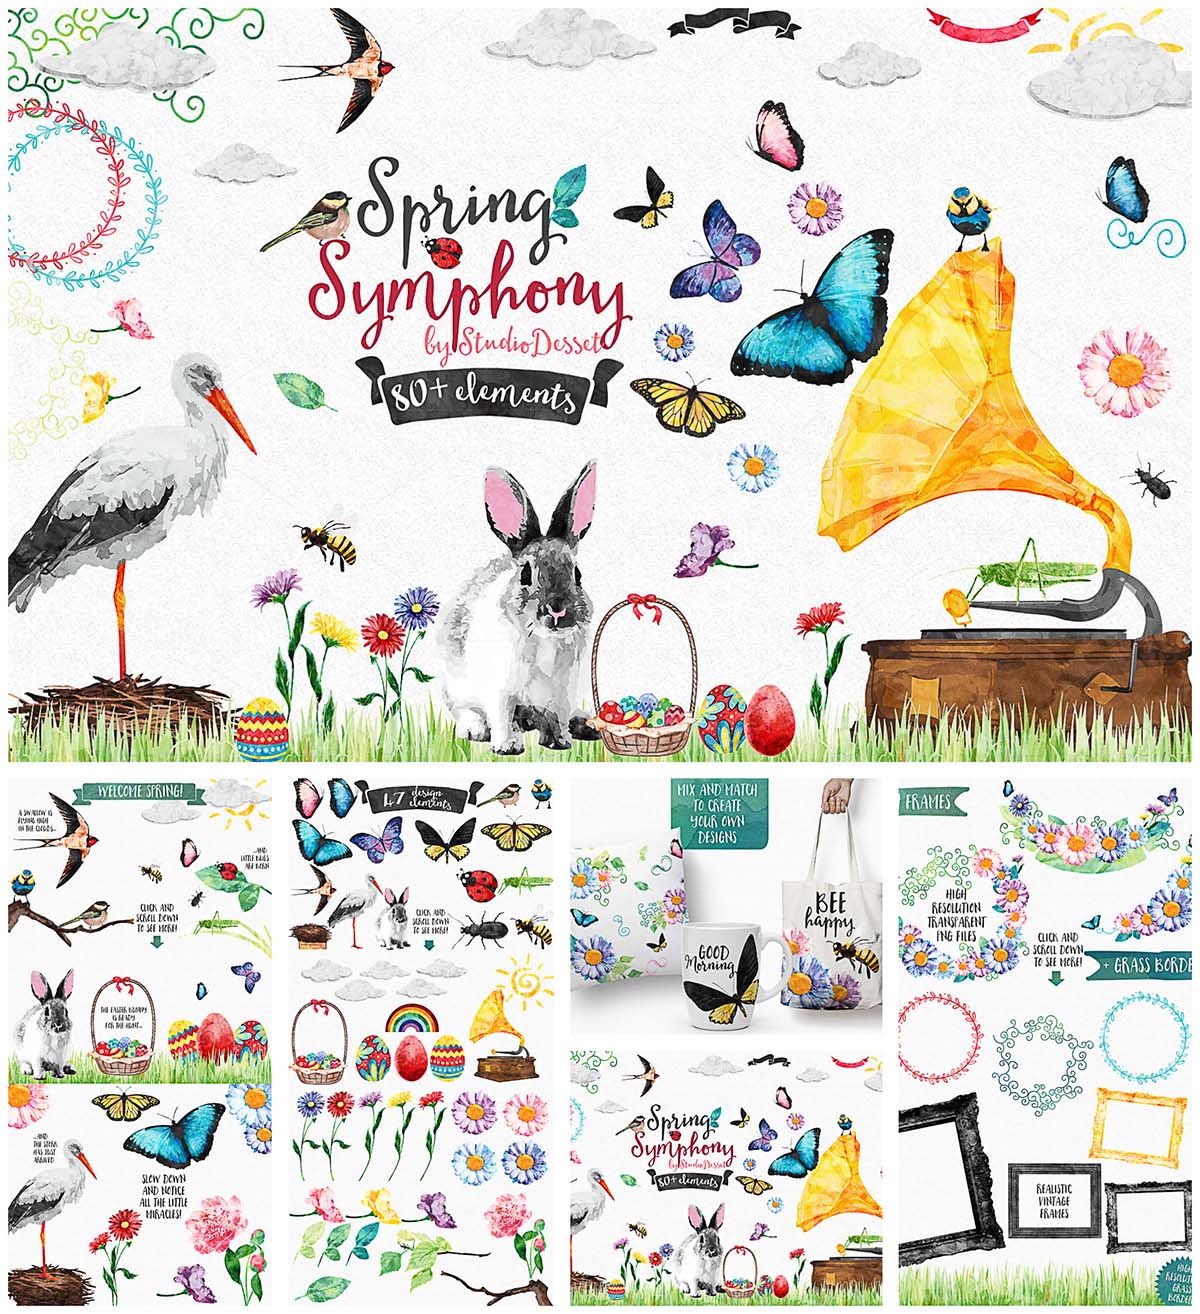 Spring symphony elements